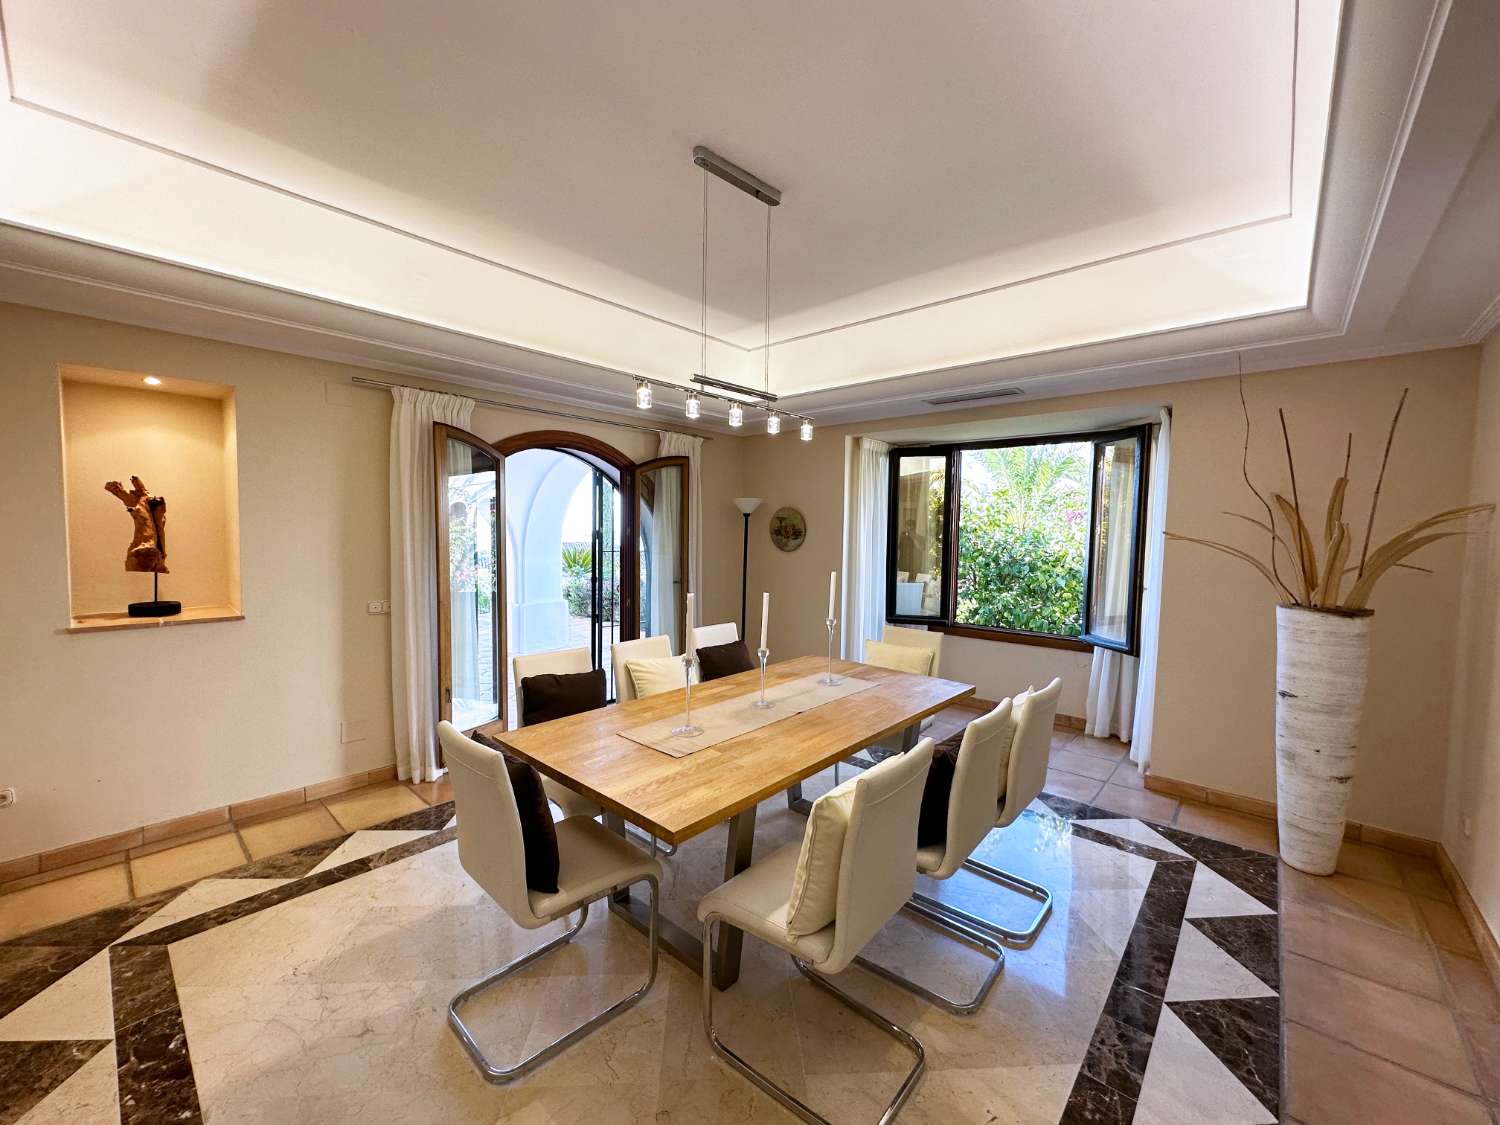 For sale, 6 bedrooms villa in Sierra Blanca, Marbella.  Plot 2,090 m².